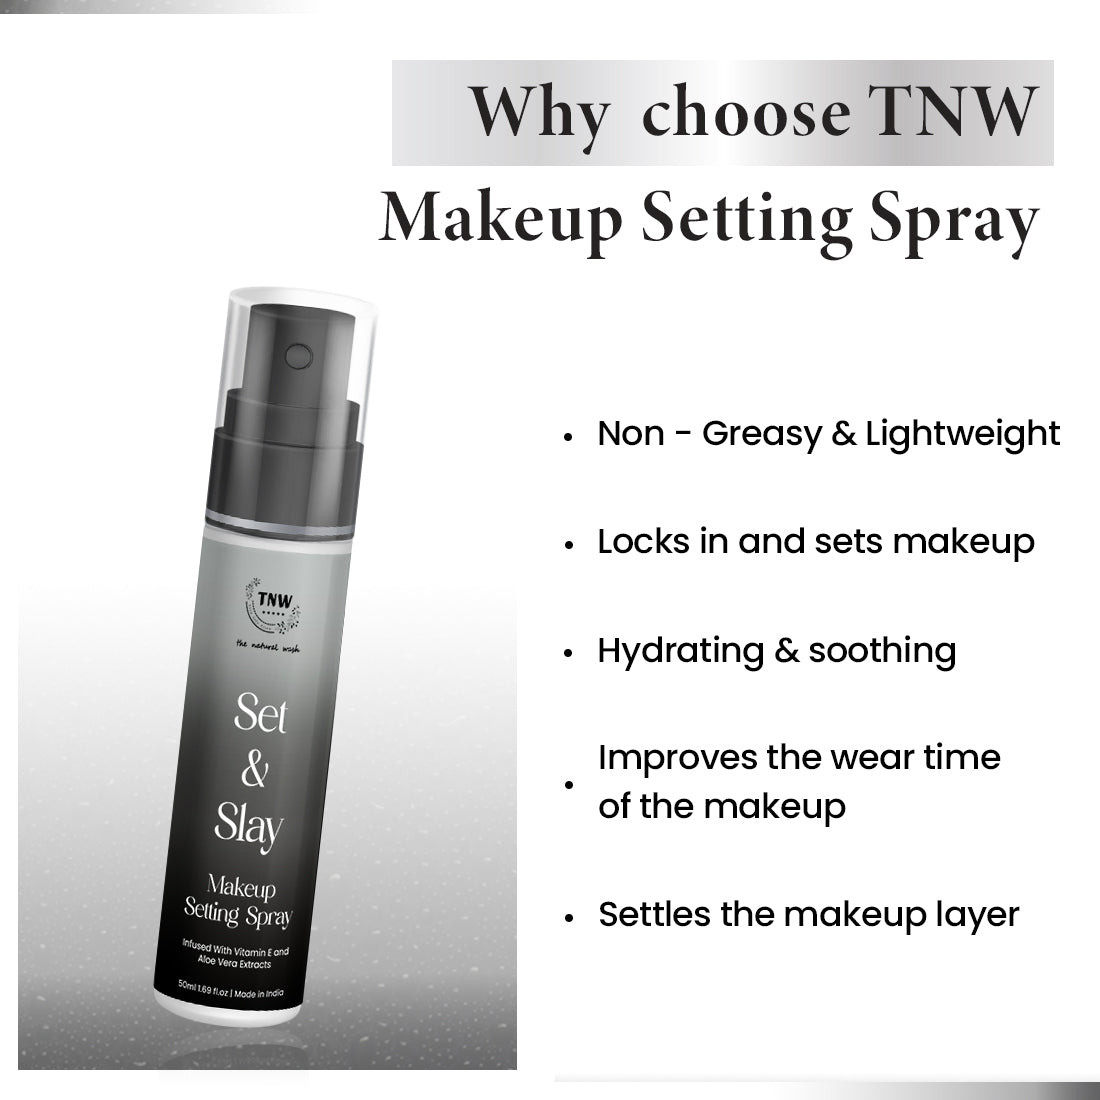 Set & Slay Makeup Setting Spray